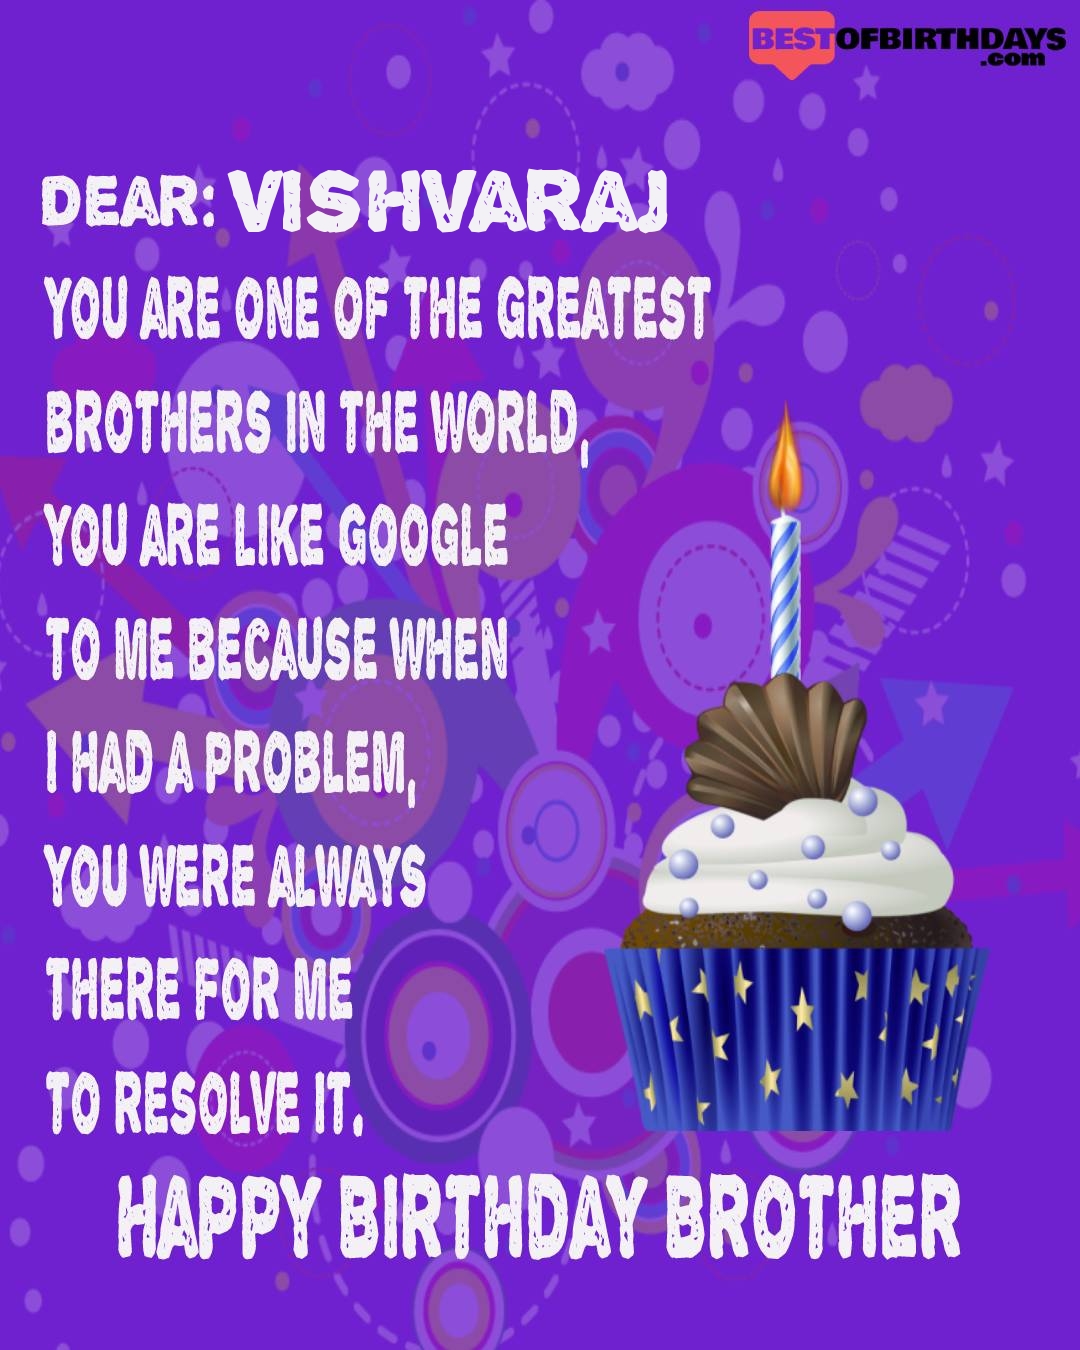 Happy birthday vishvaraj bhai brother bro